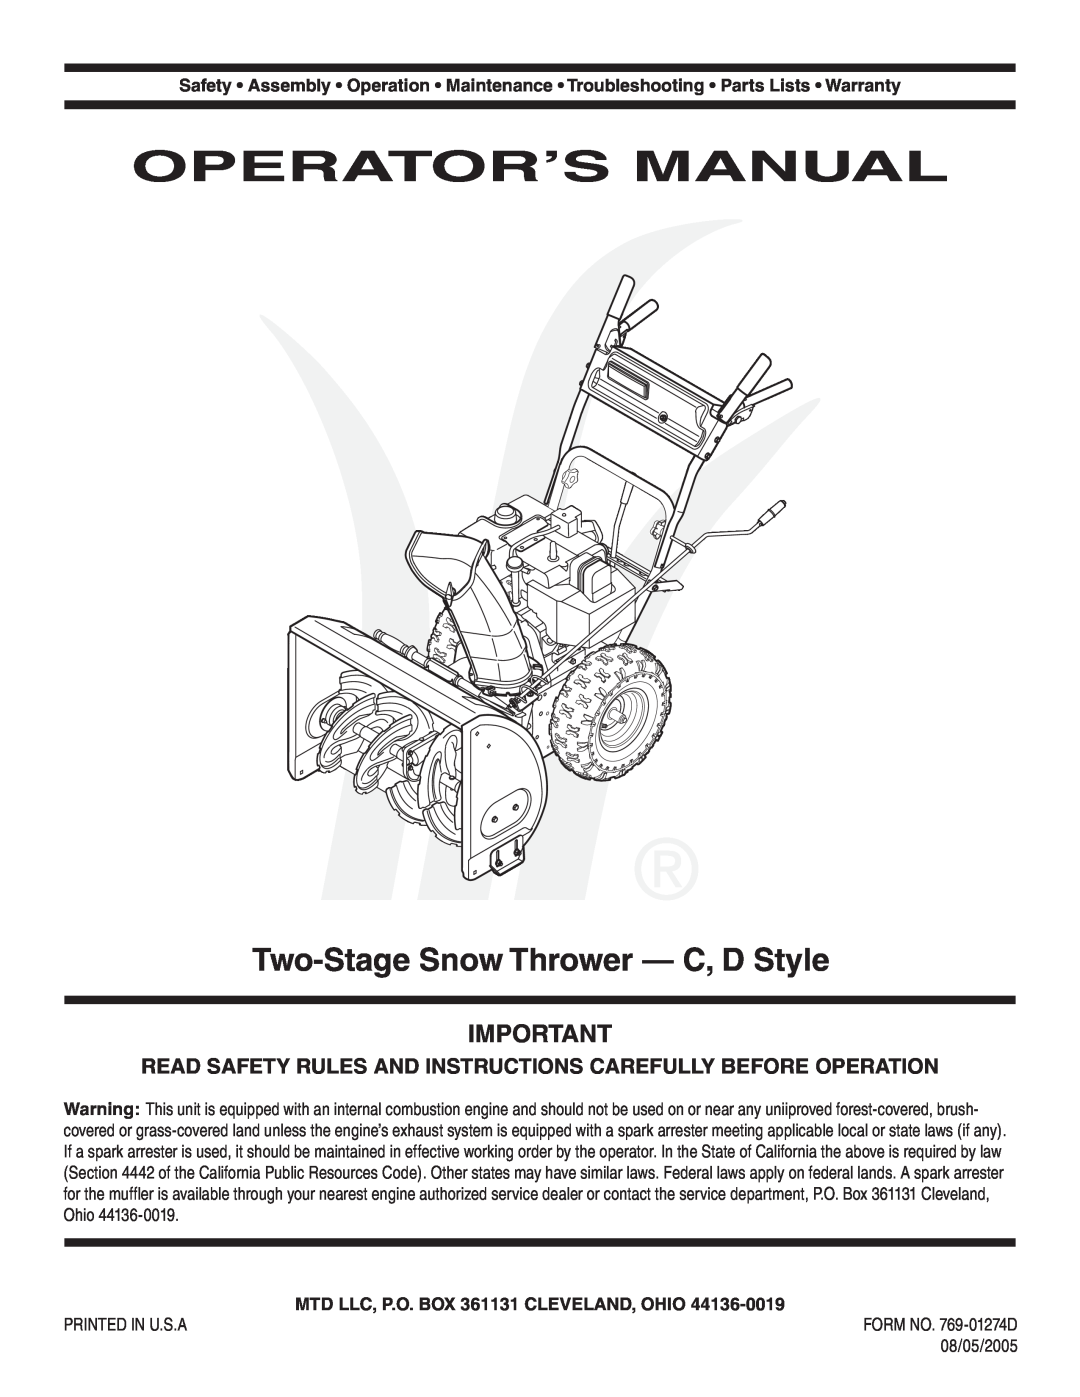 Bolens warranty Operator’S Manual, Two-Stage Snow Thrower - C, D Style, MTD LLC, P.O. BOX 361131 CLEVELAND, OHIO 